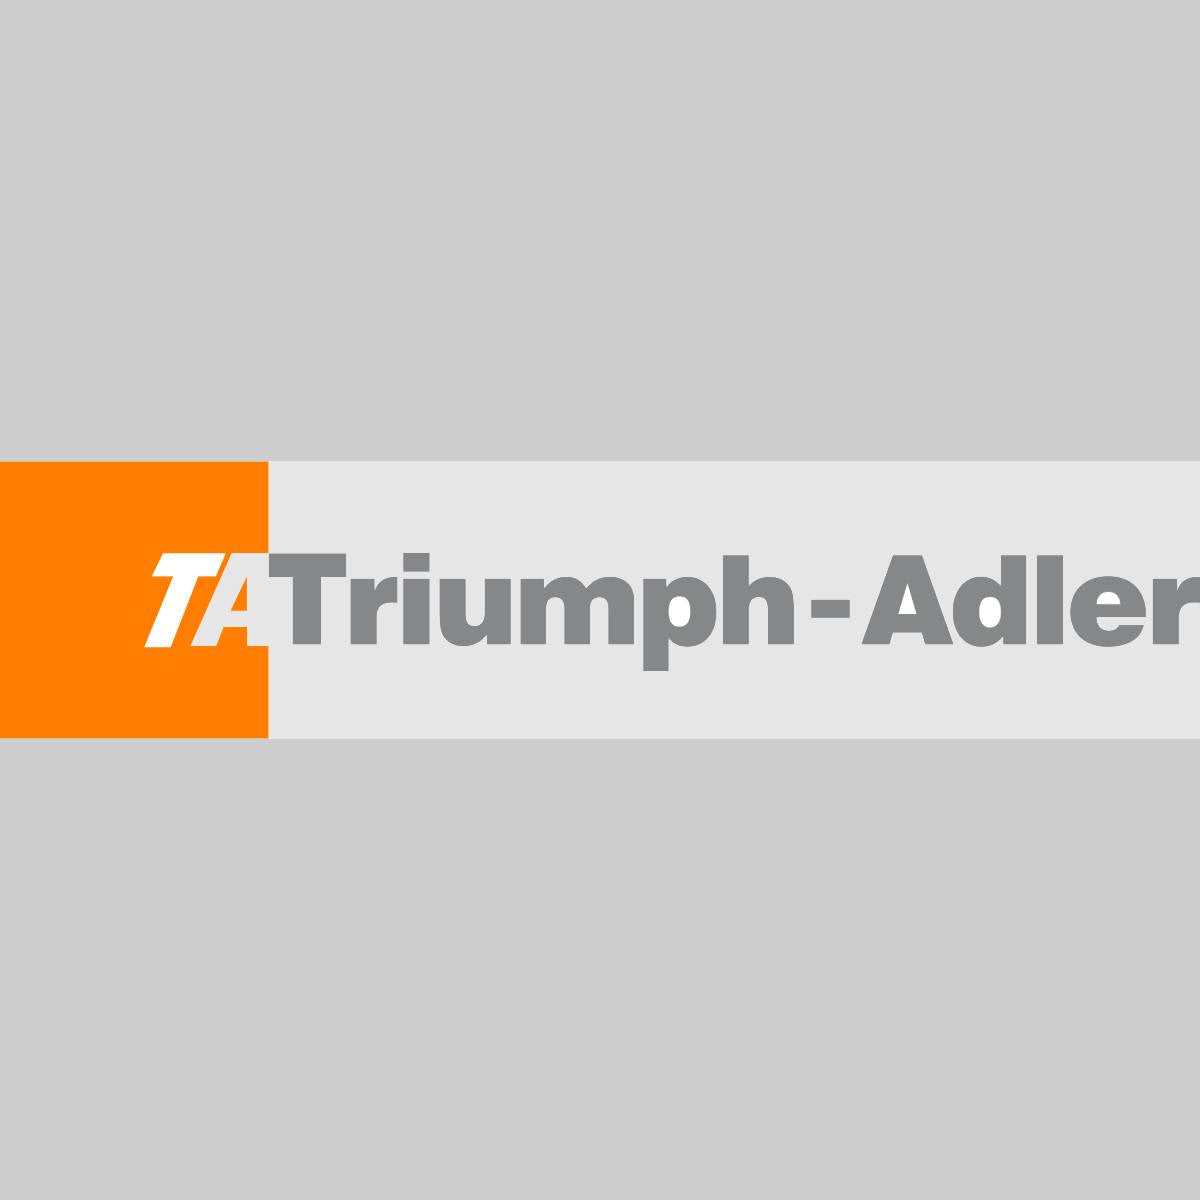 "Originální sada Triumph Adler Black Copy Kit 654010111 pro DCC 2740 2840 NEW OVP